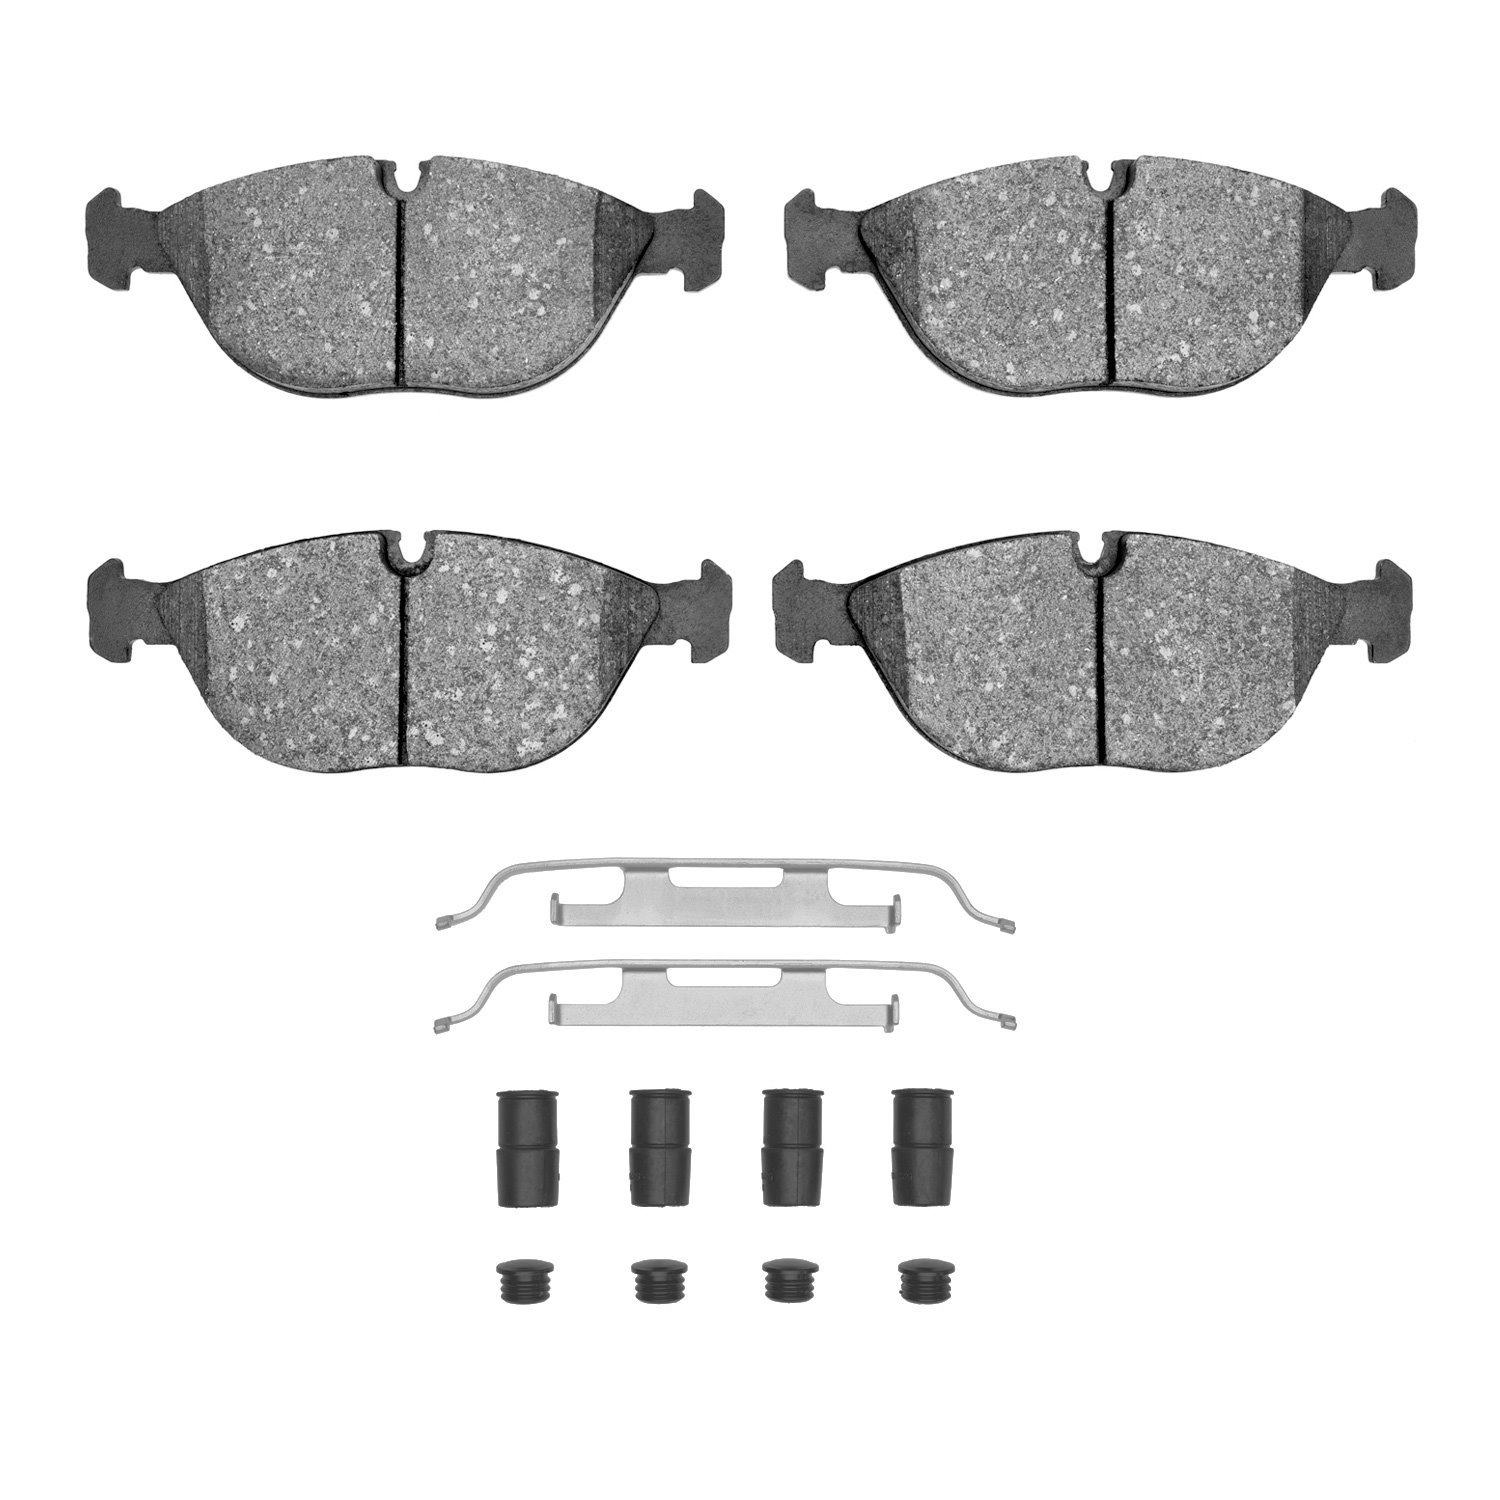 Optimum OE Brake Pads & Hardware Kit, 1995-2006 Fits Multiple Makes/Models, Position: Front